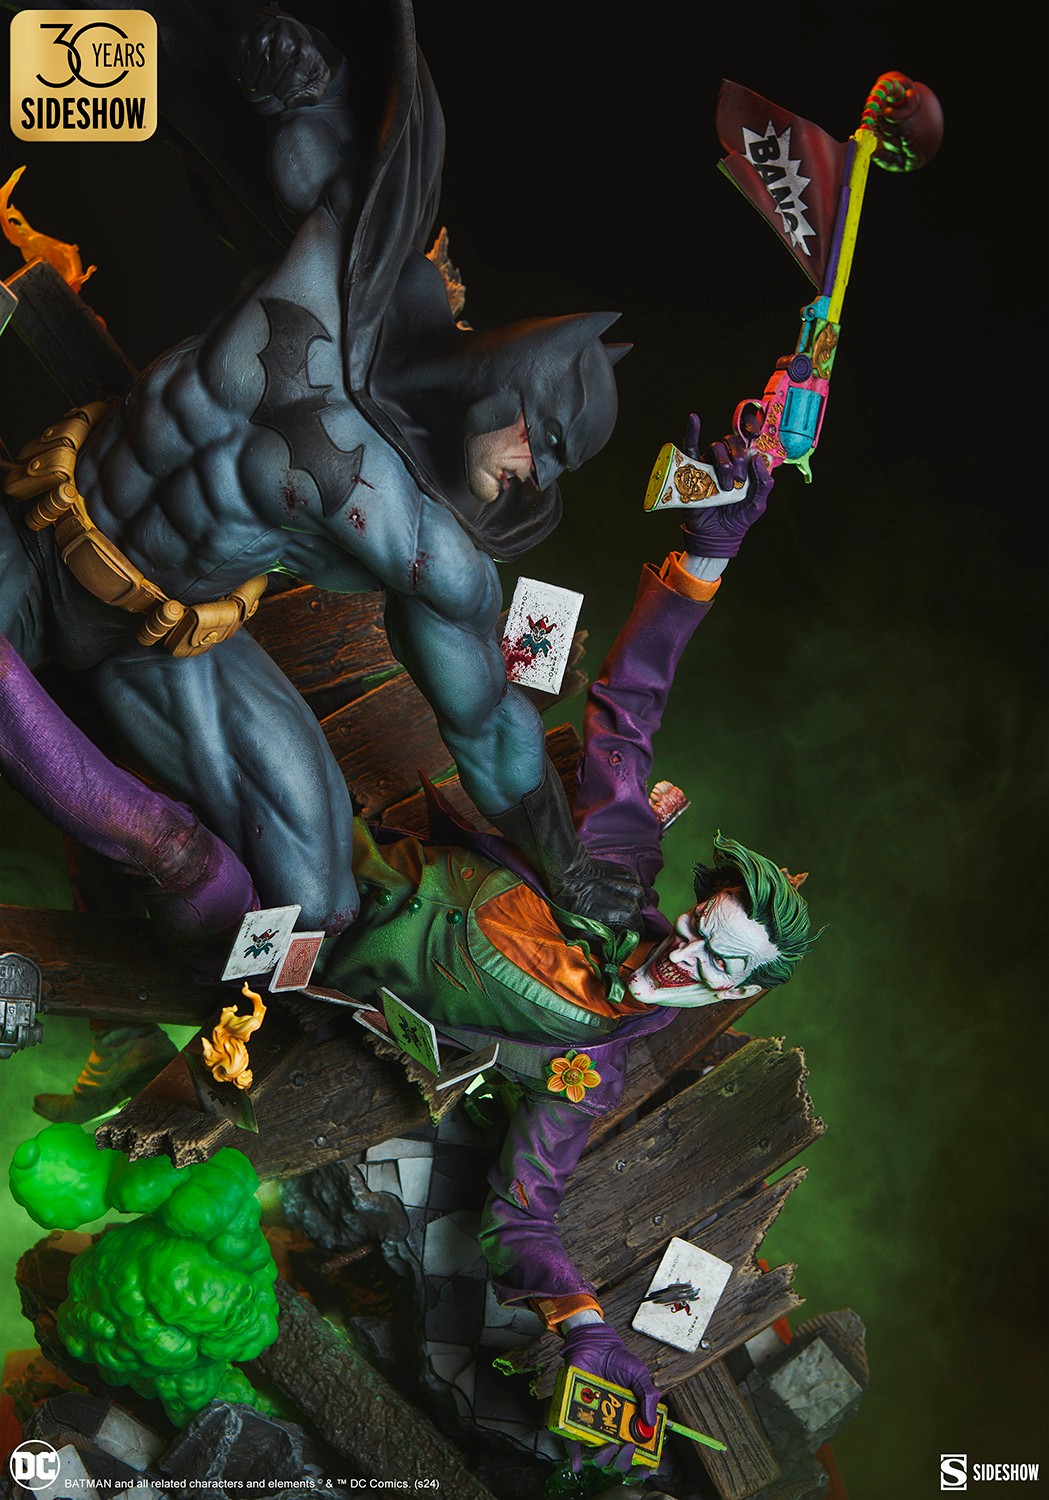 Batman vs The Joker: Eternal Enemies Collector Edition (Prototype Shown) View 9